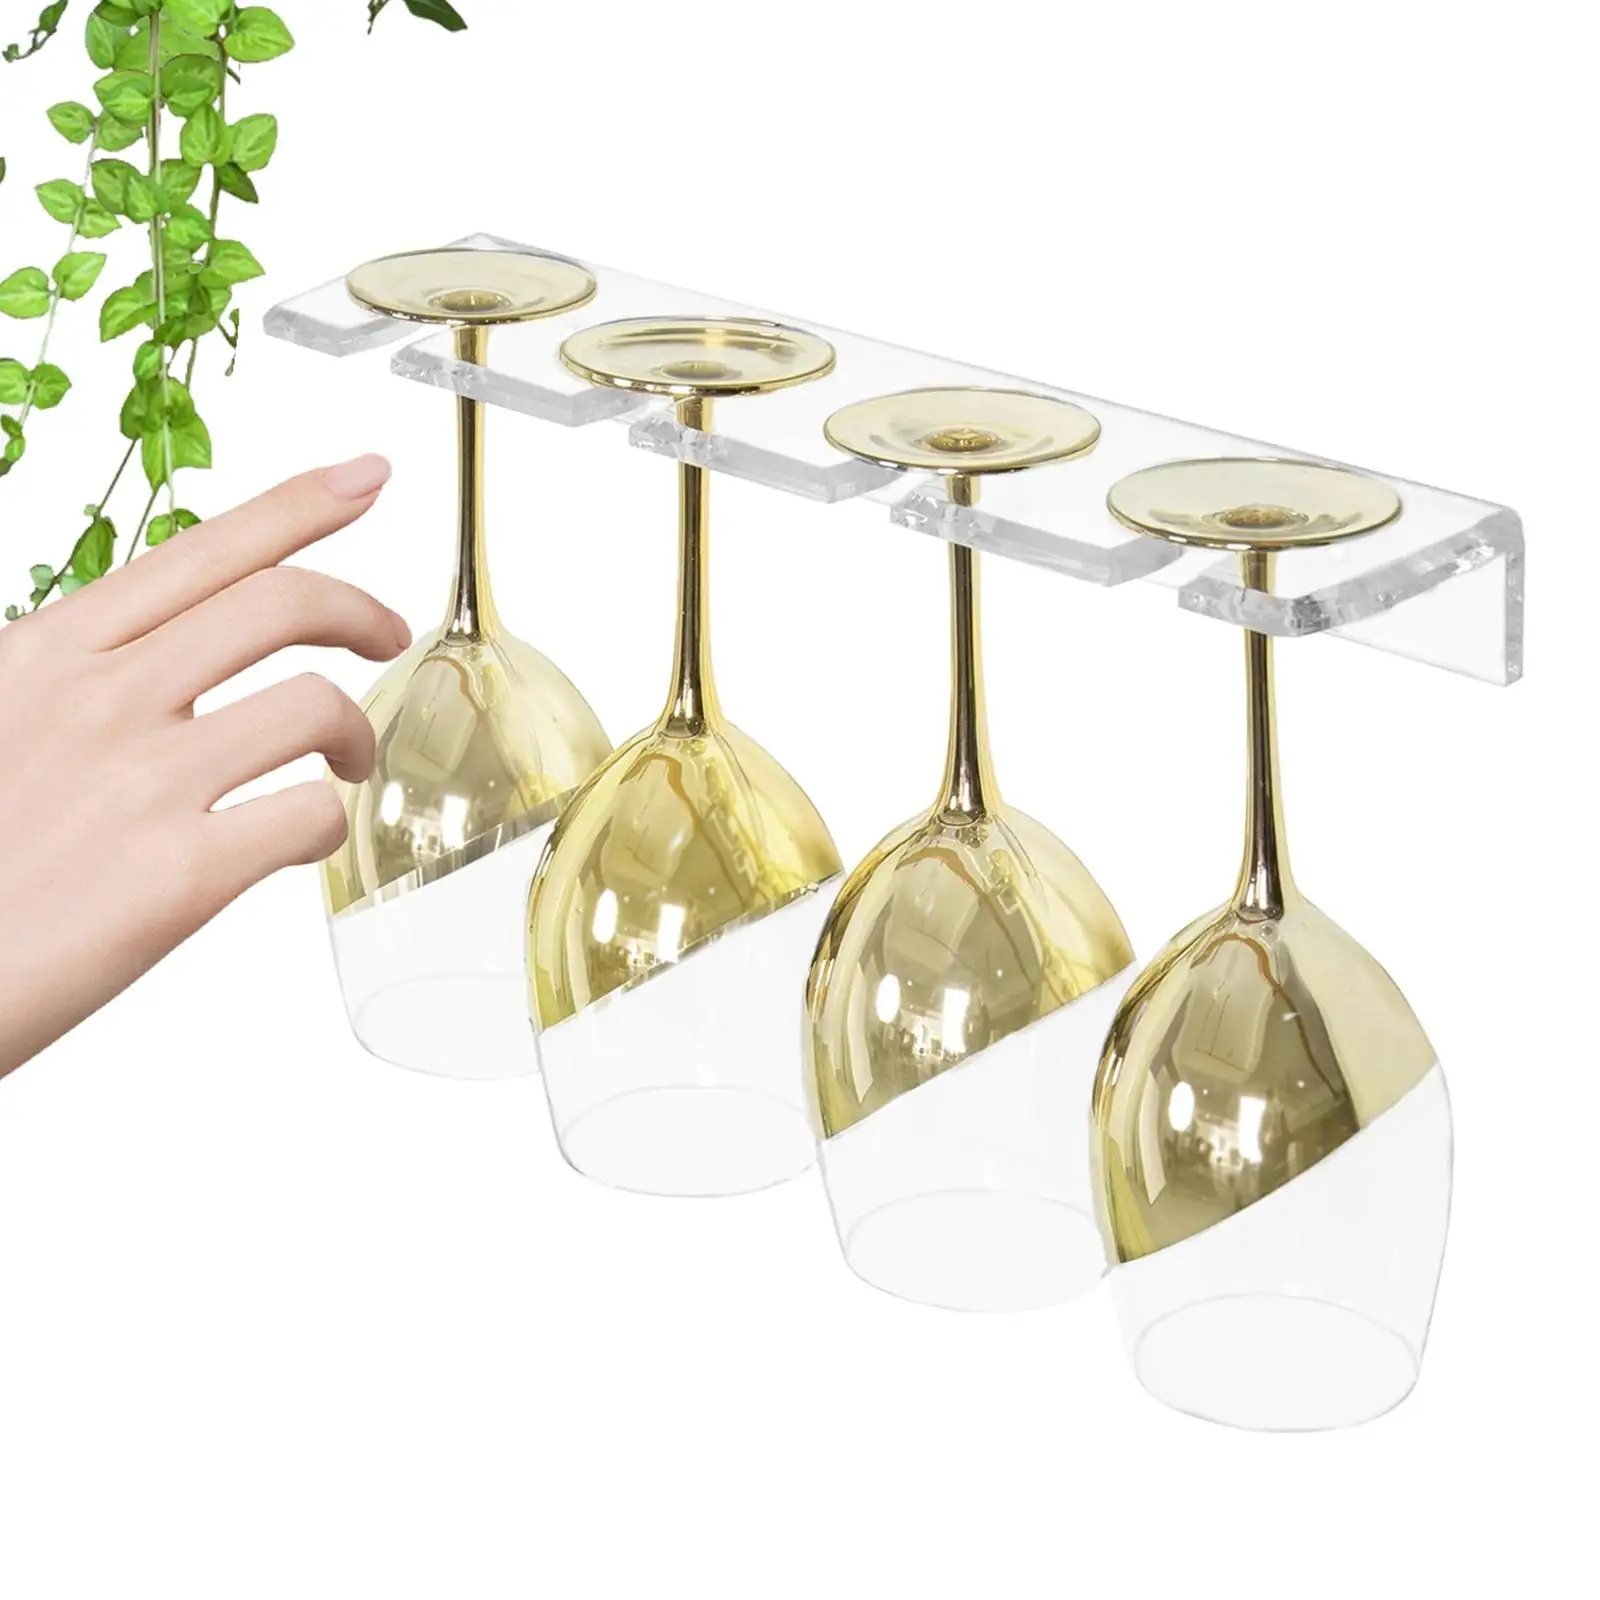 Stemware Holder Hanging Organizer Easy Installation Hanging Wine Glass Holder